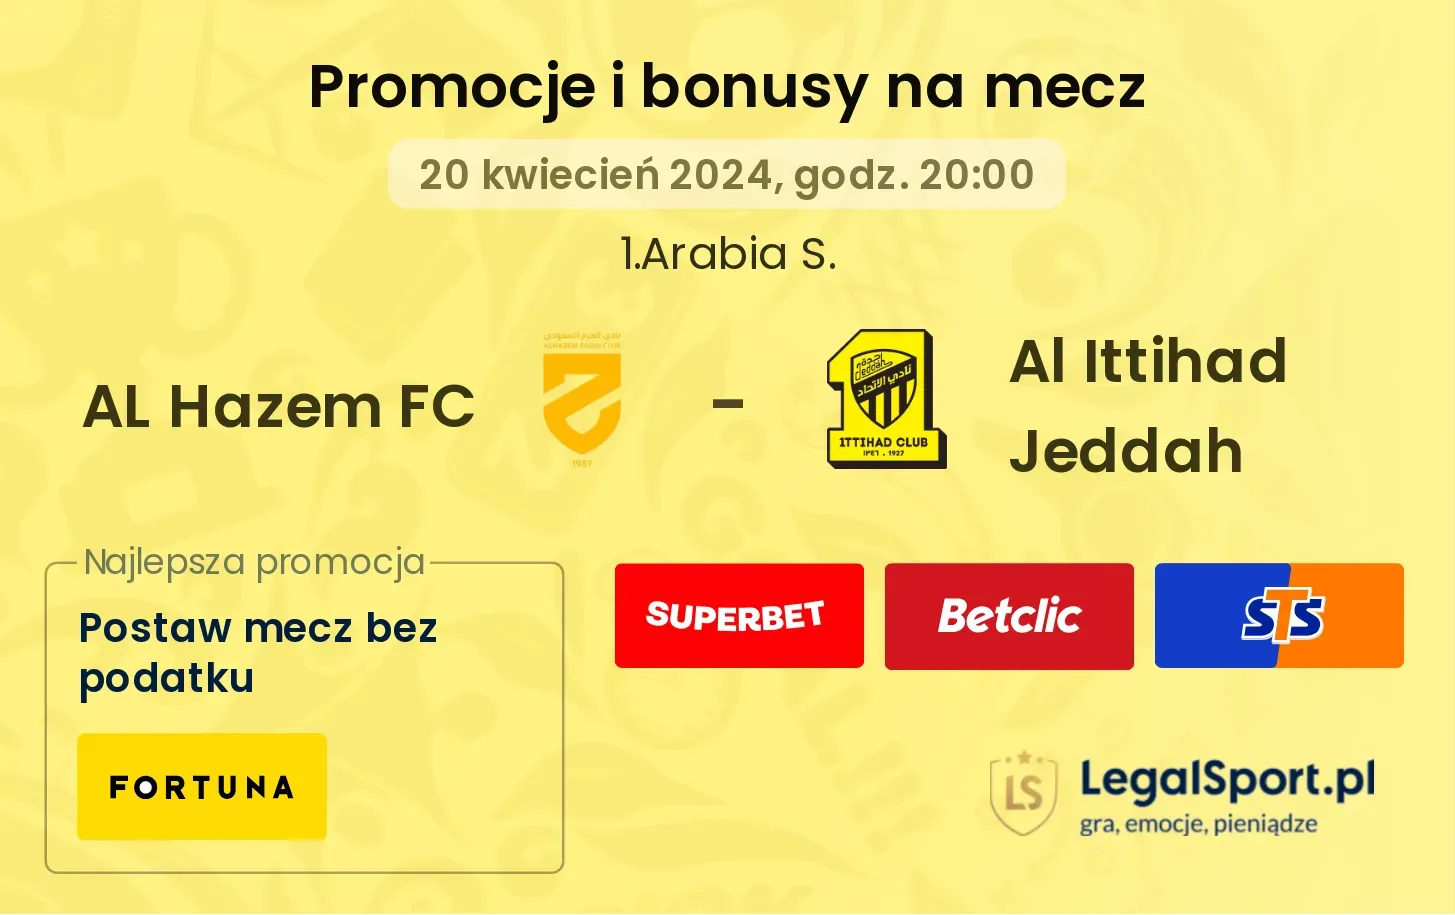 AL Hazem FC - Al Ittihad Jeddah promocje bonusy na mecz